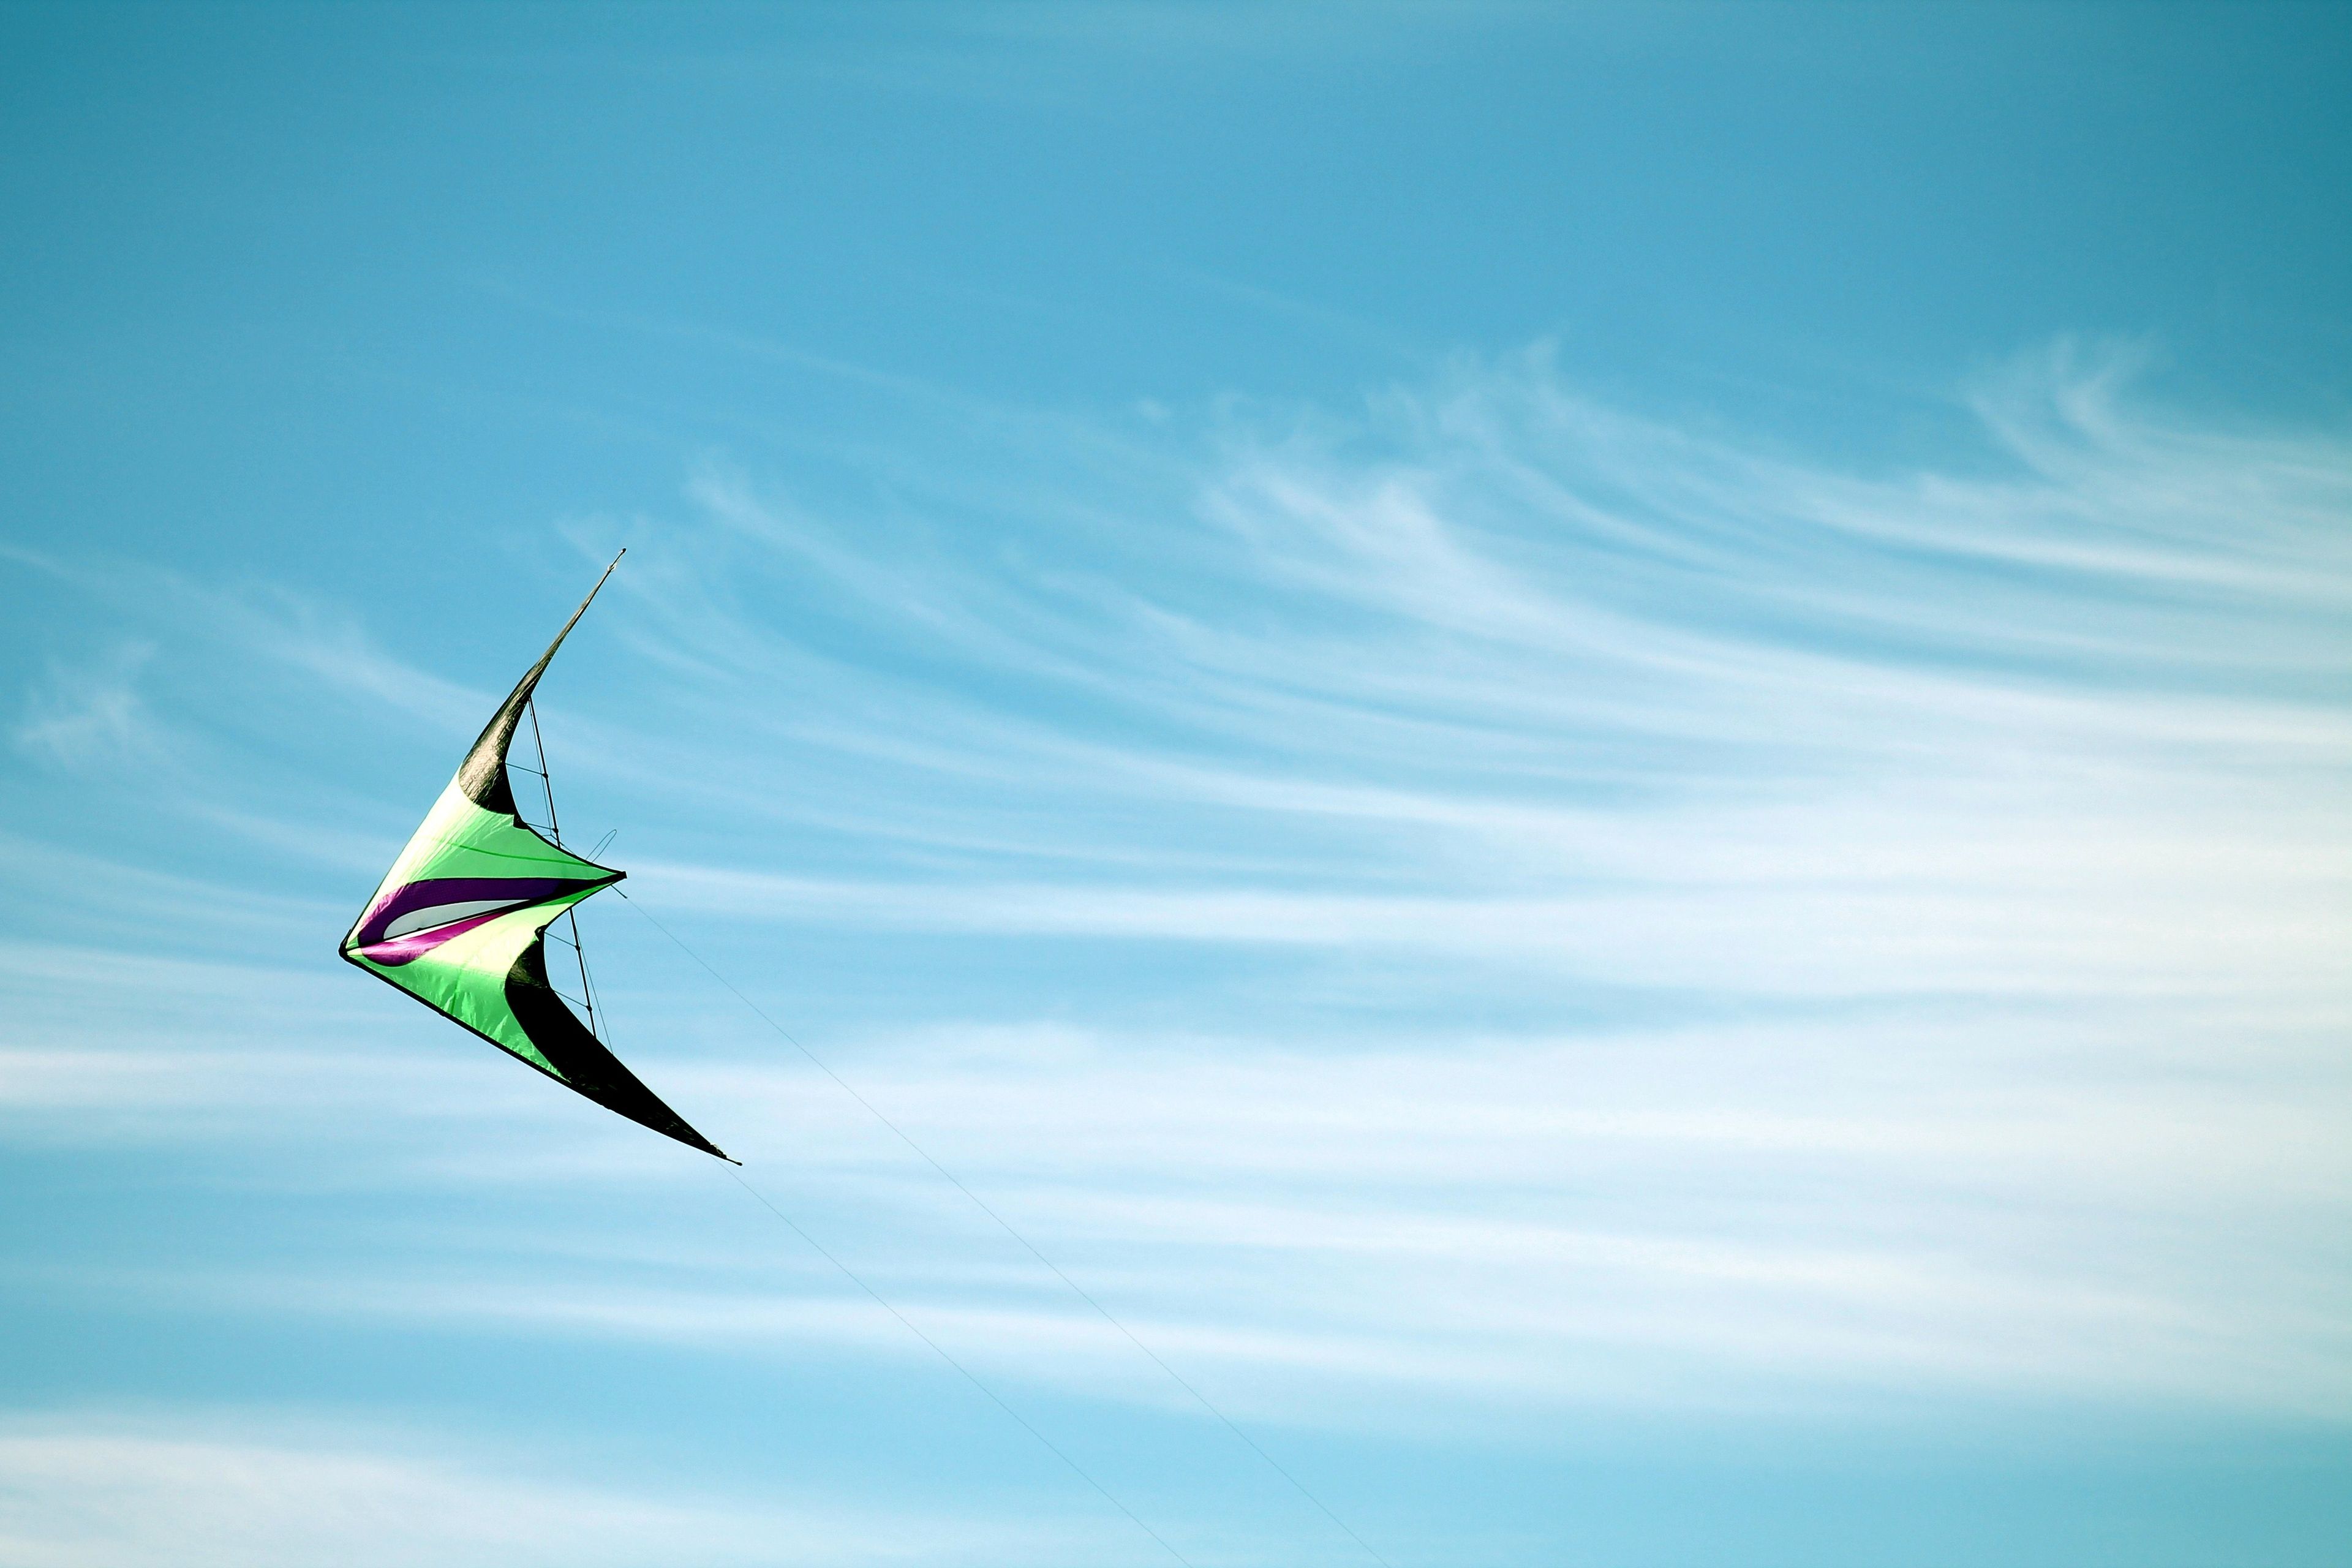 A green kite flies through a blue sky.